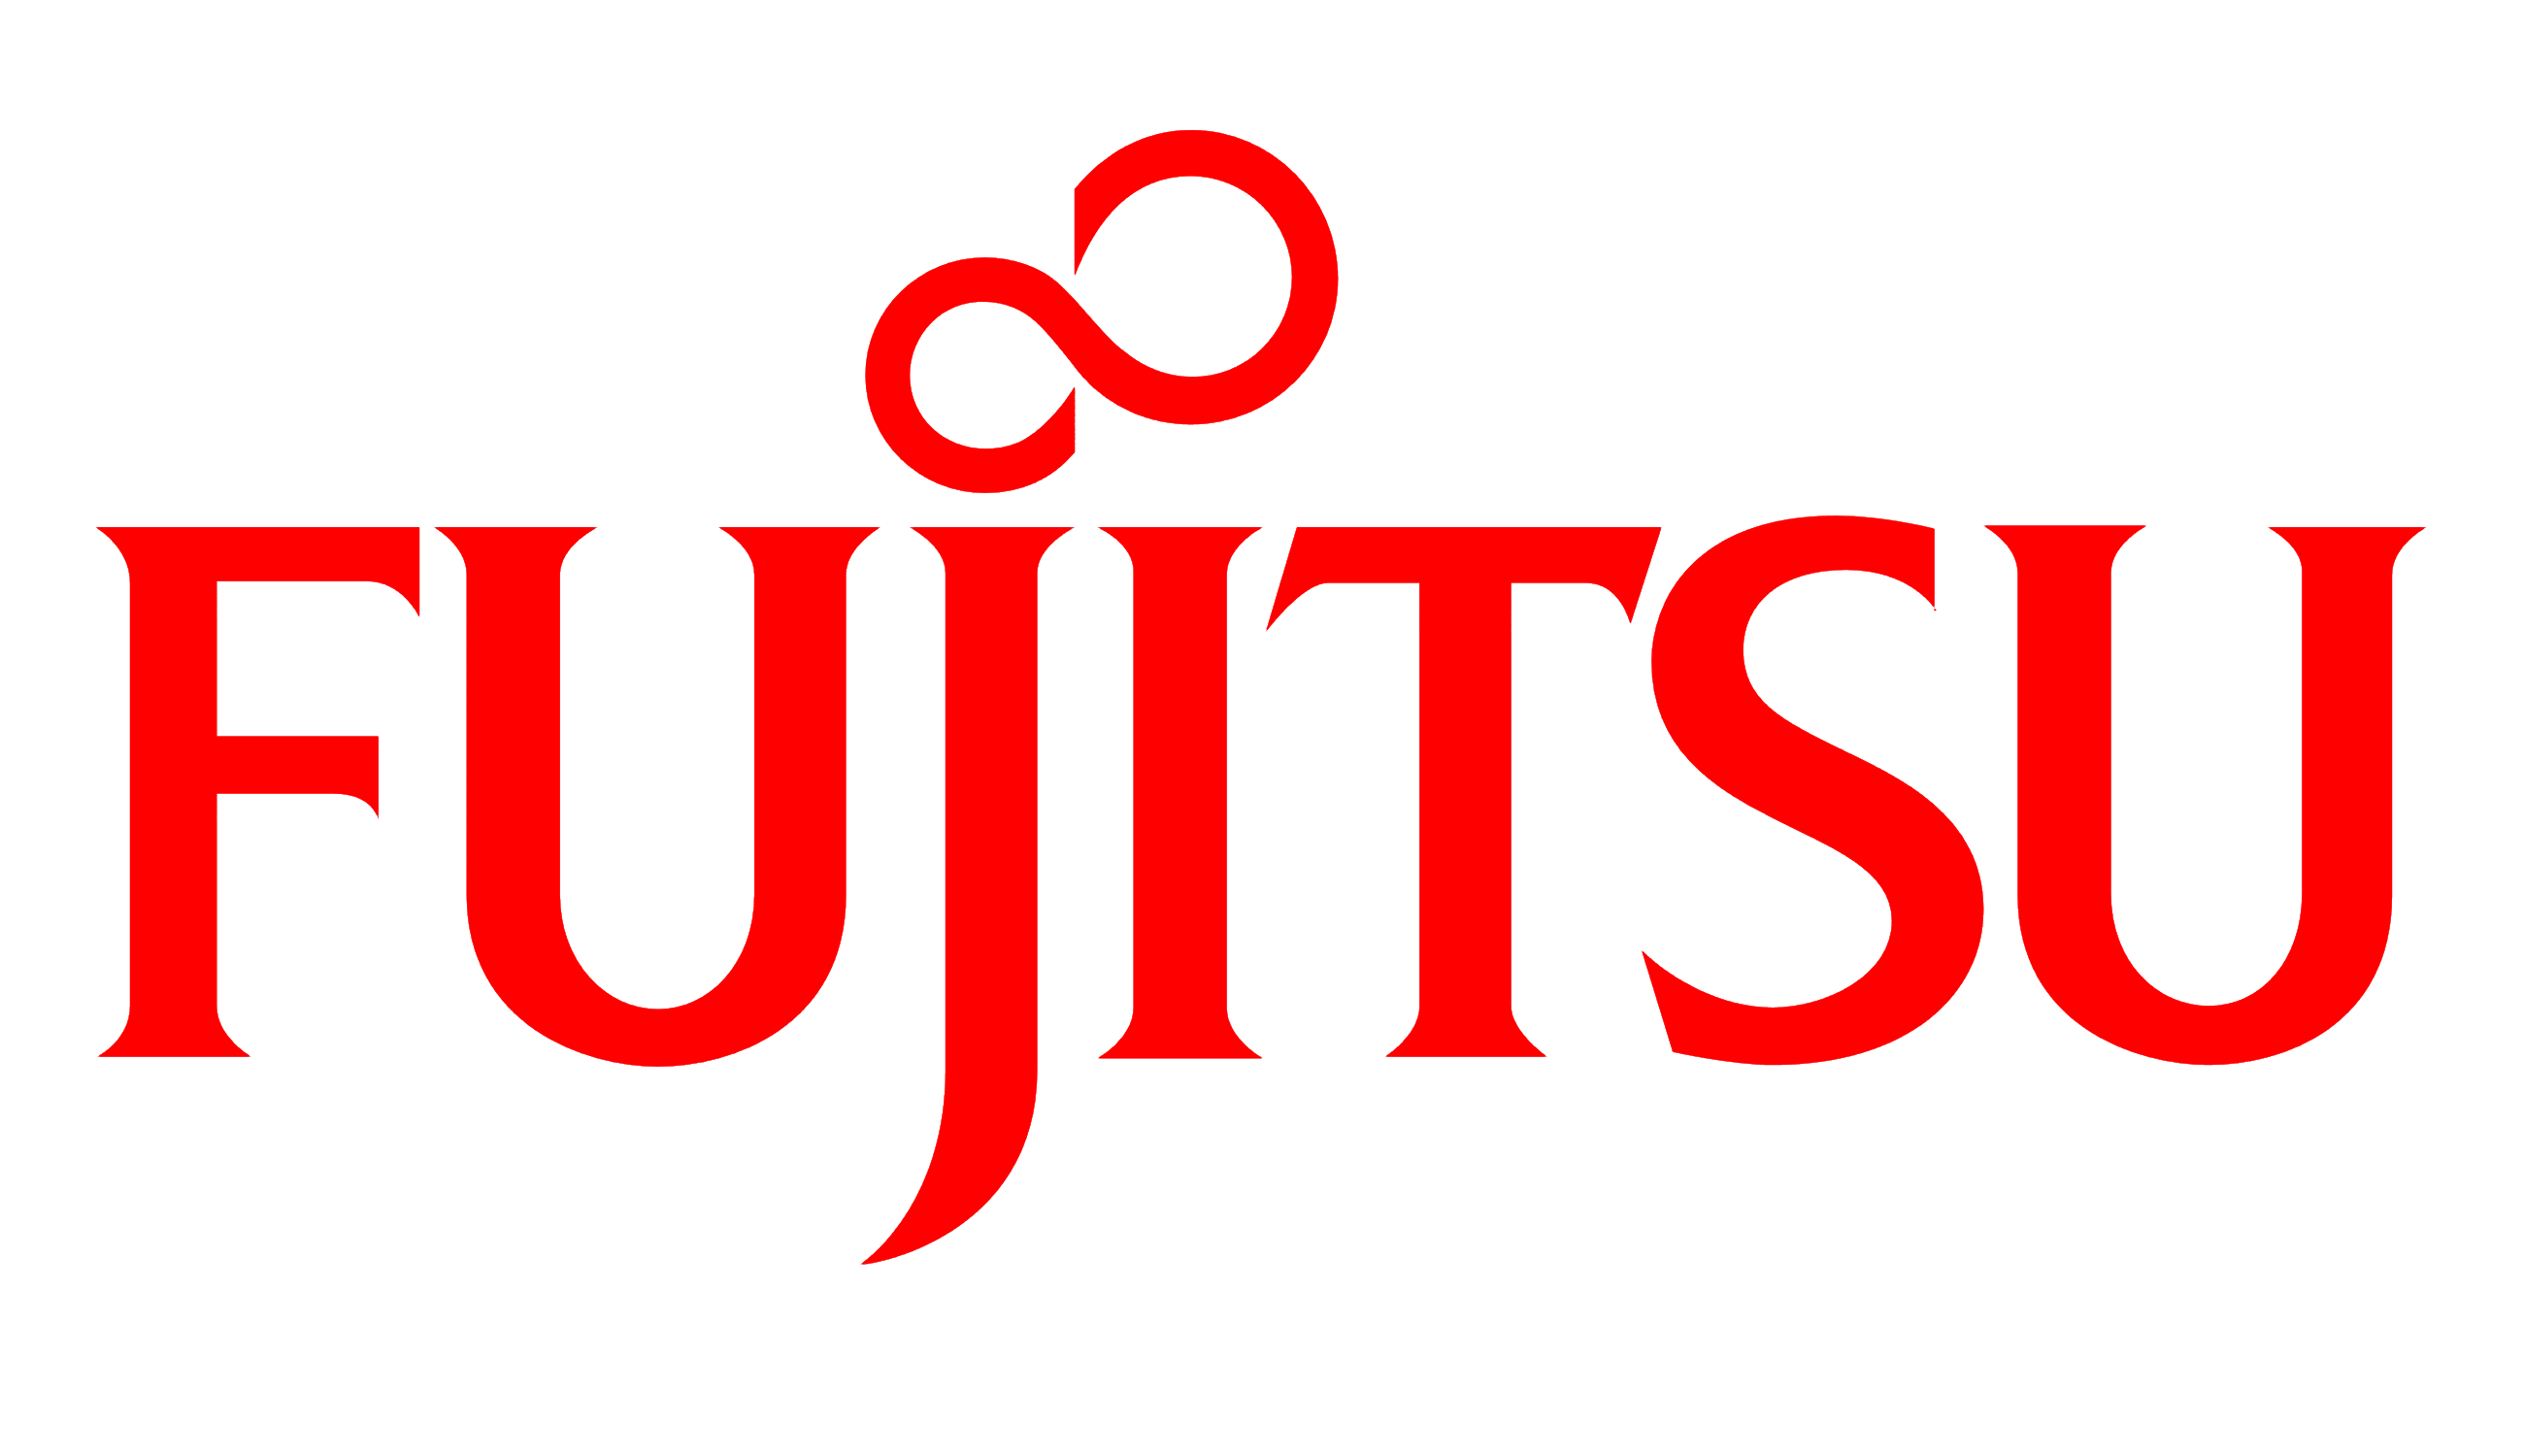 Fujitsu logo, logotype